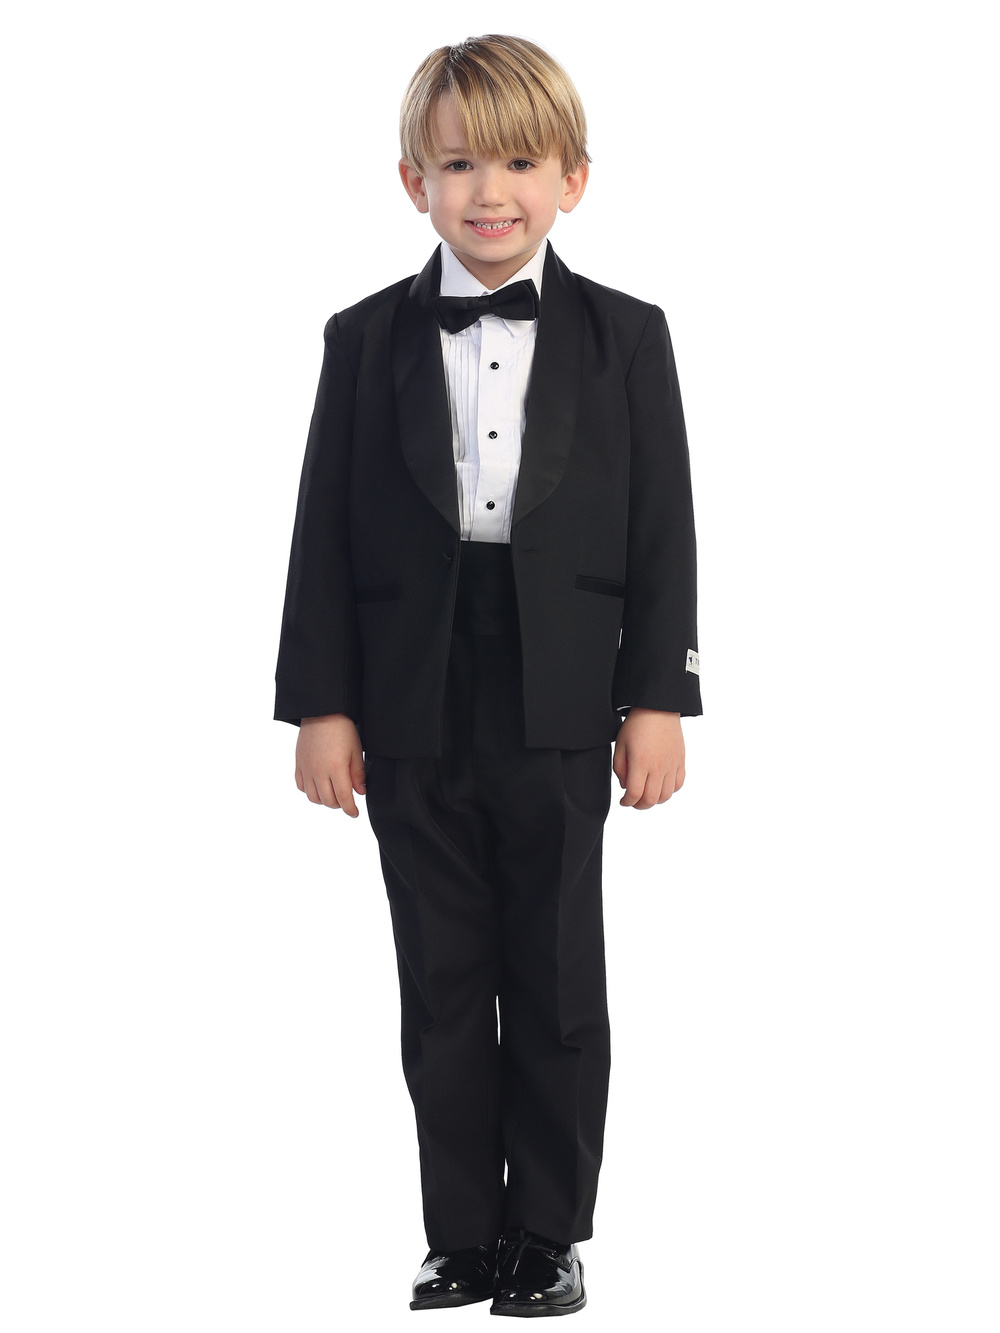 27 Colors Satin Bow Tie Cummerbund for Infant Toddler Kid Boy Suit Formal Tuxedo 